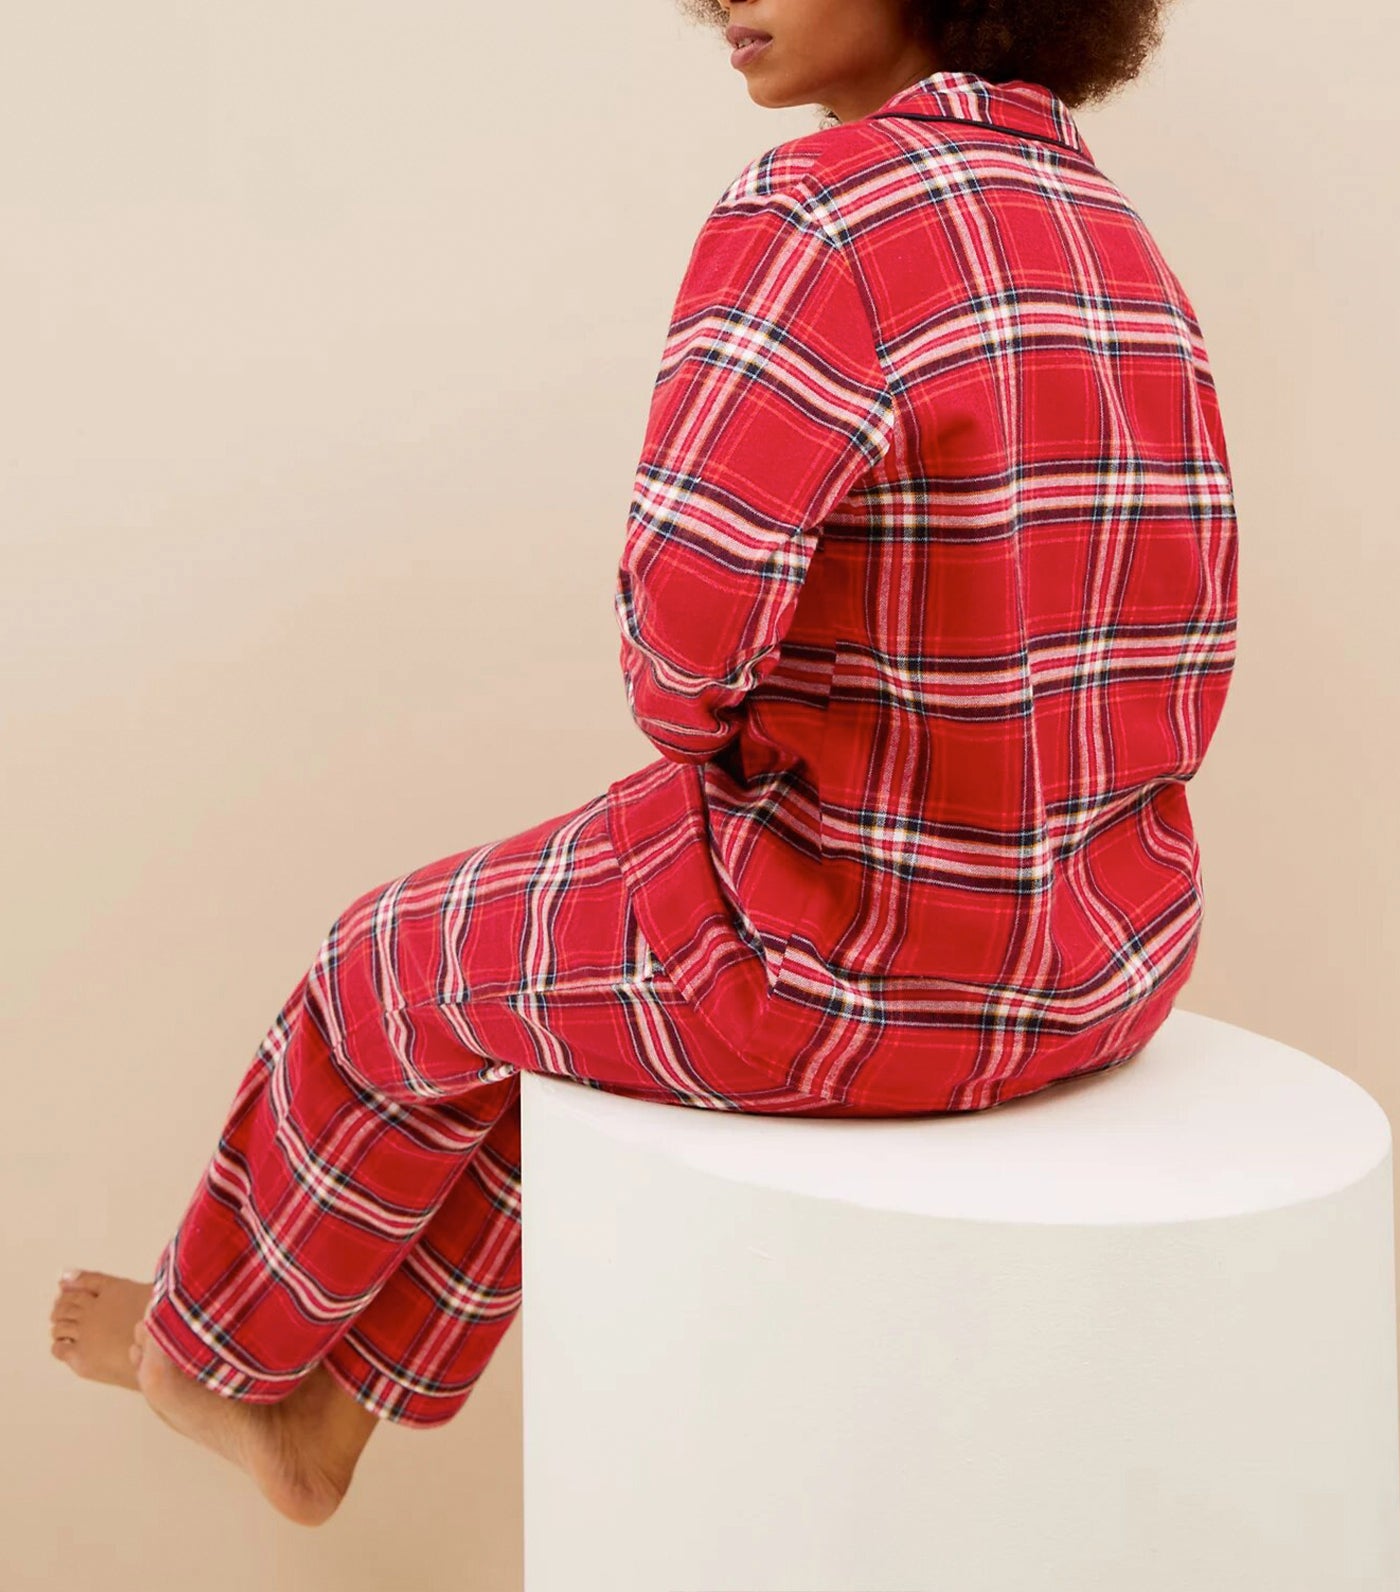 Women's Checked Family Pajama Set Red Mix